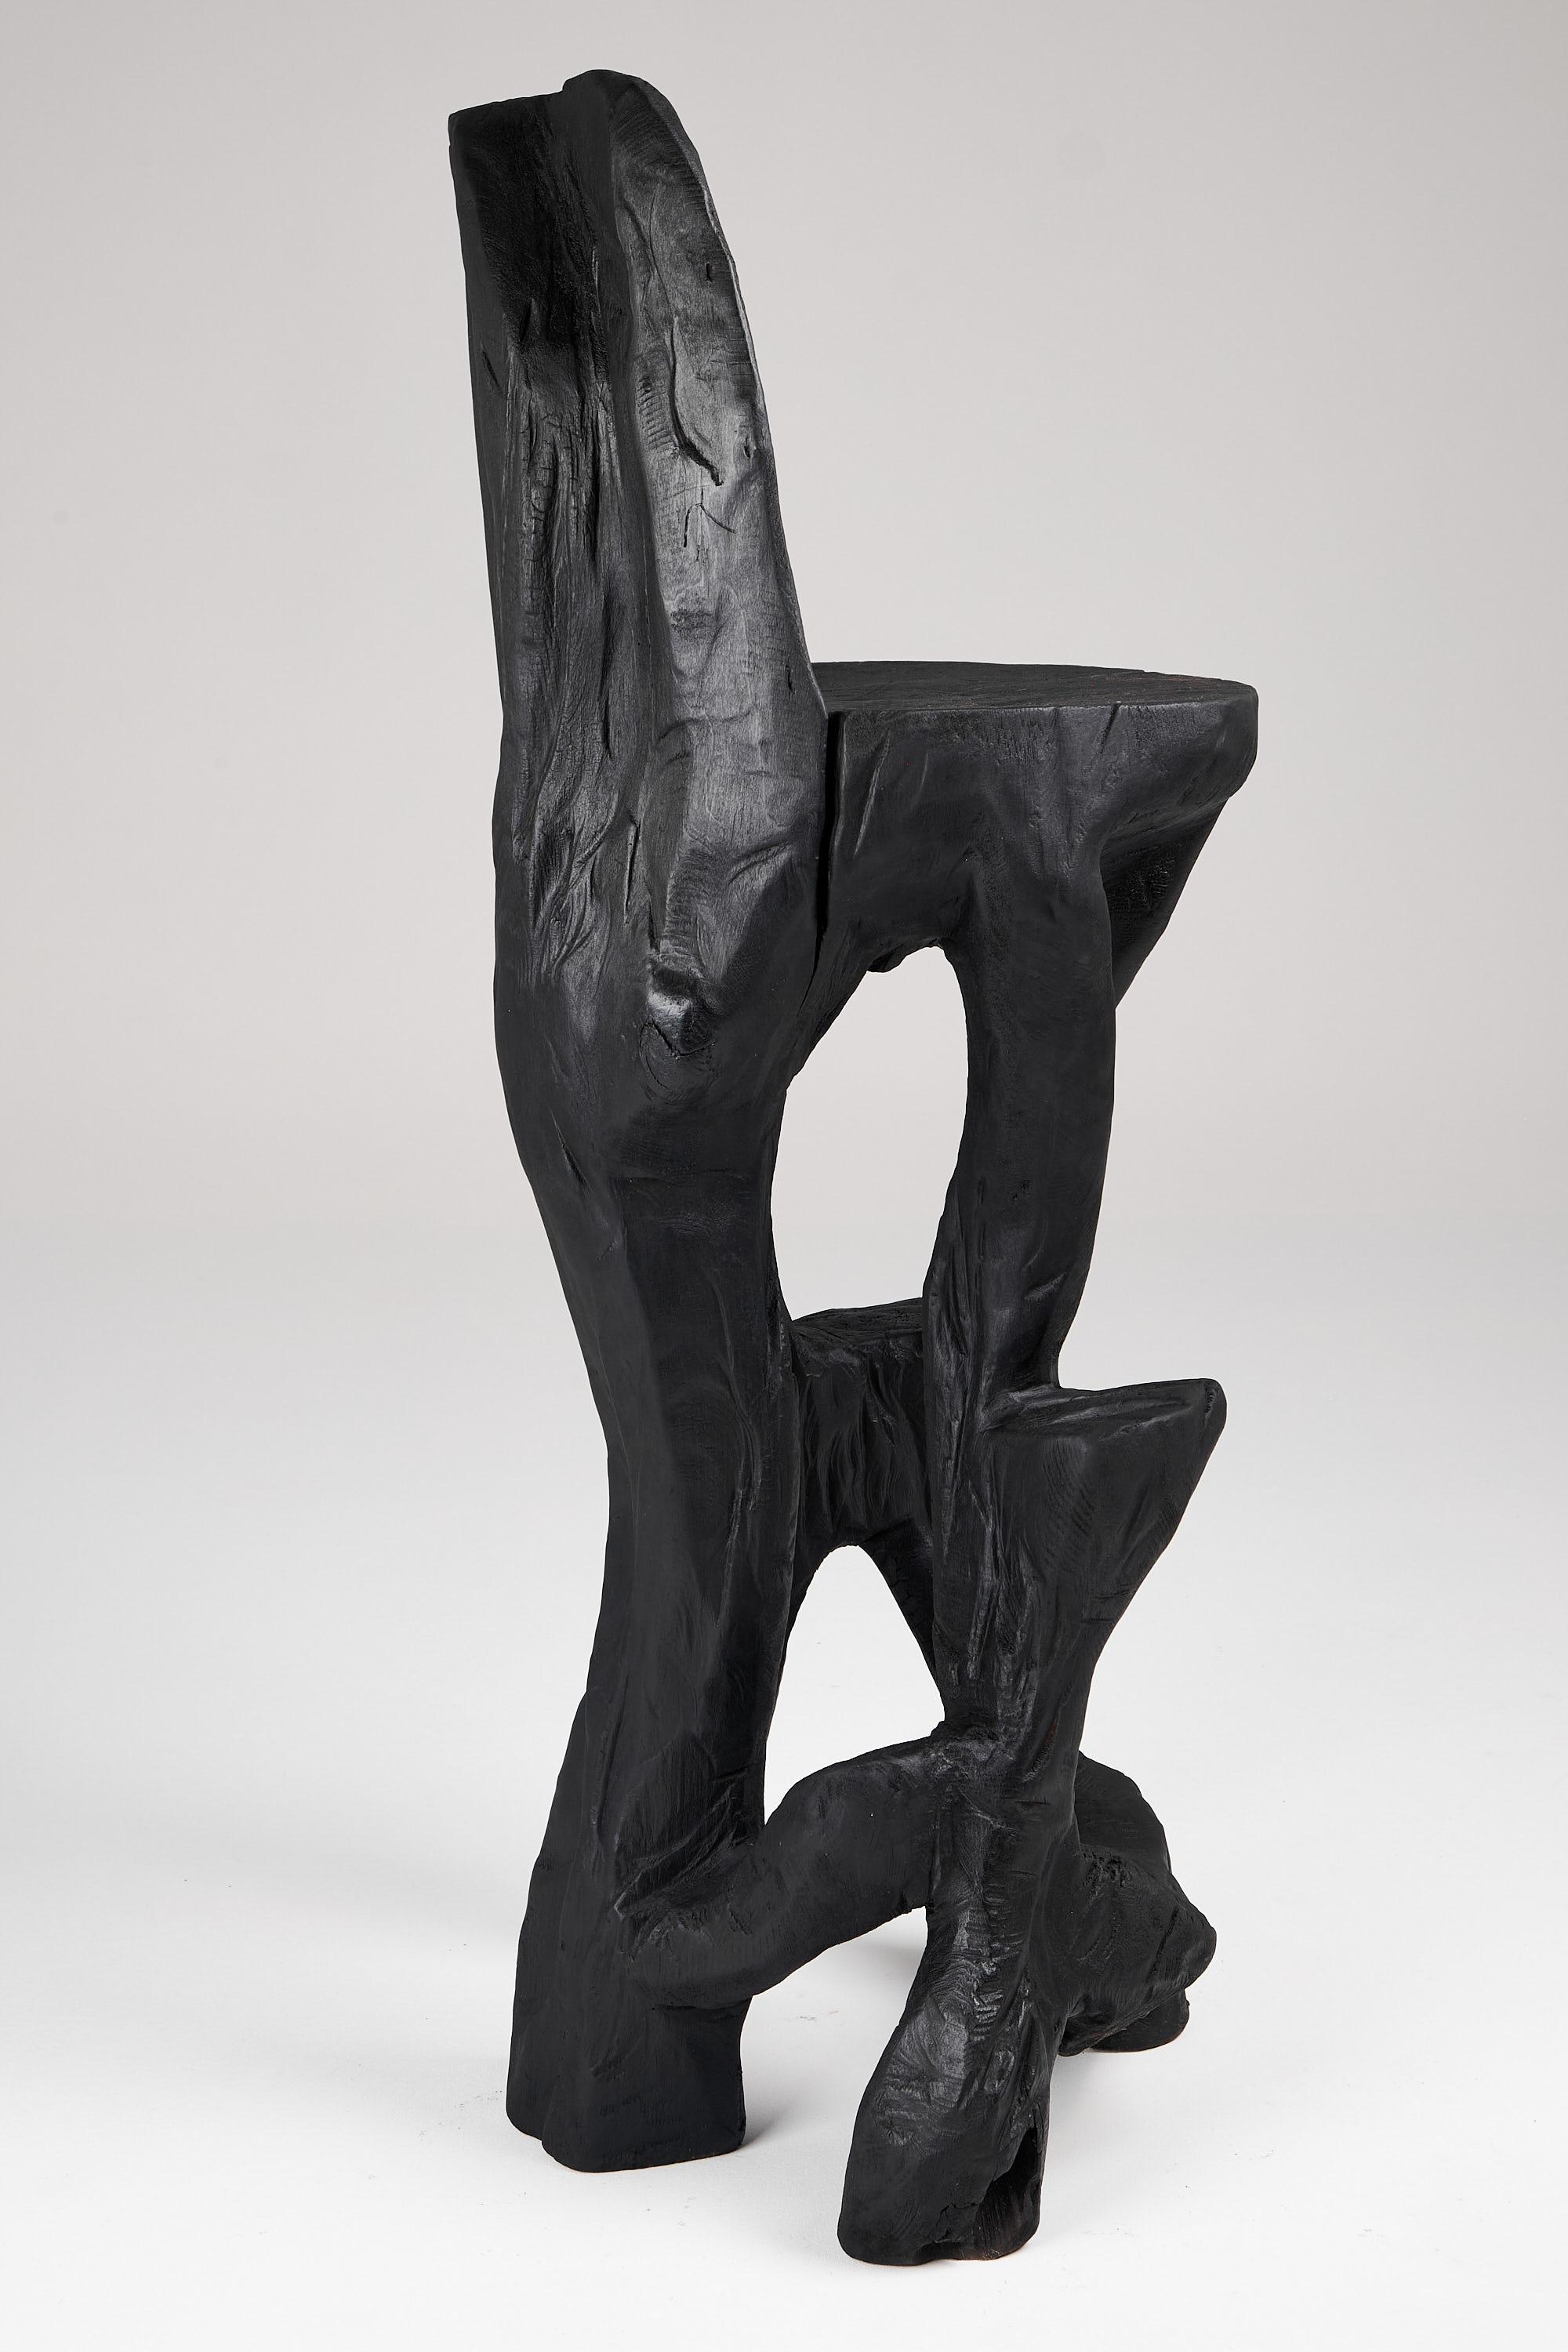 Makha, Solid Wood Sculptural Bar Chair, Original Contemporary Design, Logniture For Sale 1